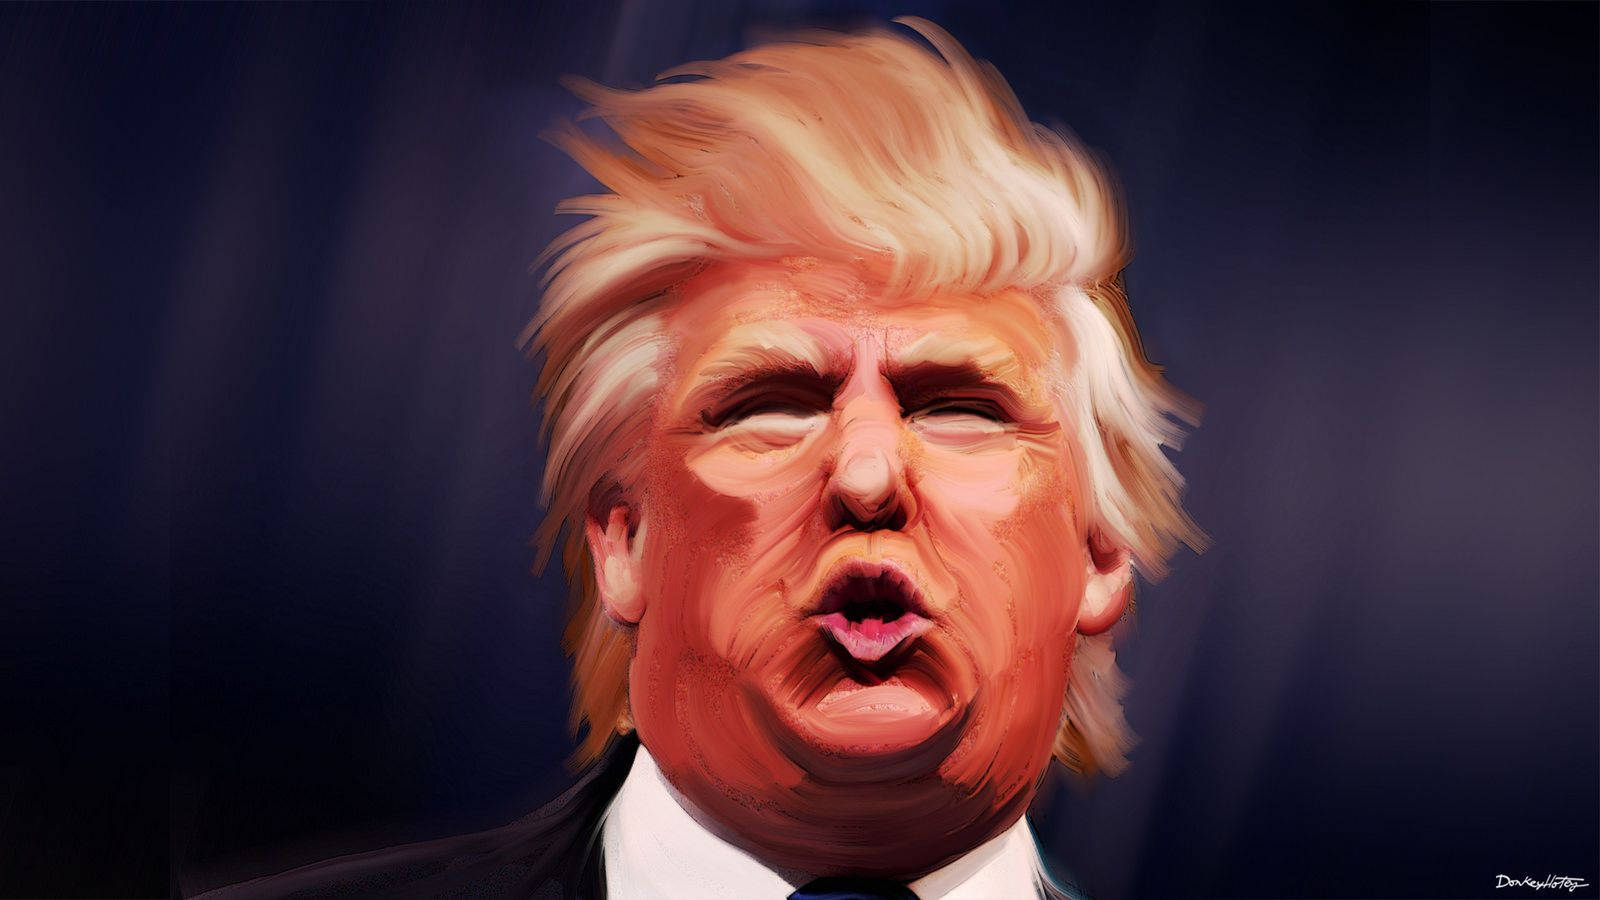 President Donald Trump rocks the duckface. Wallpaper